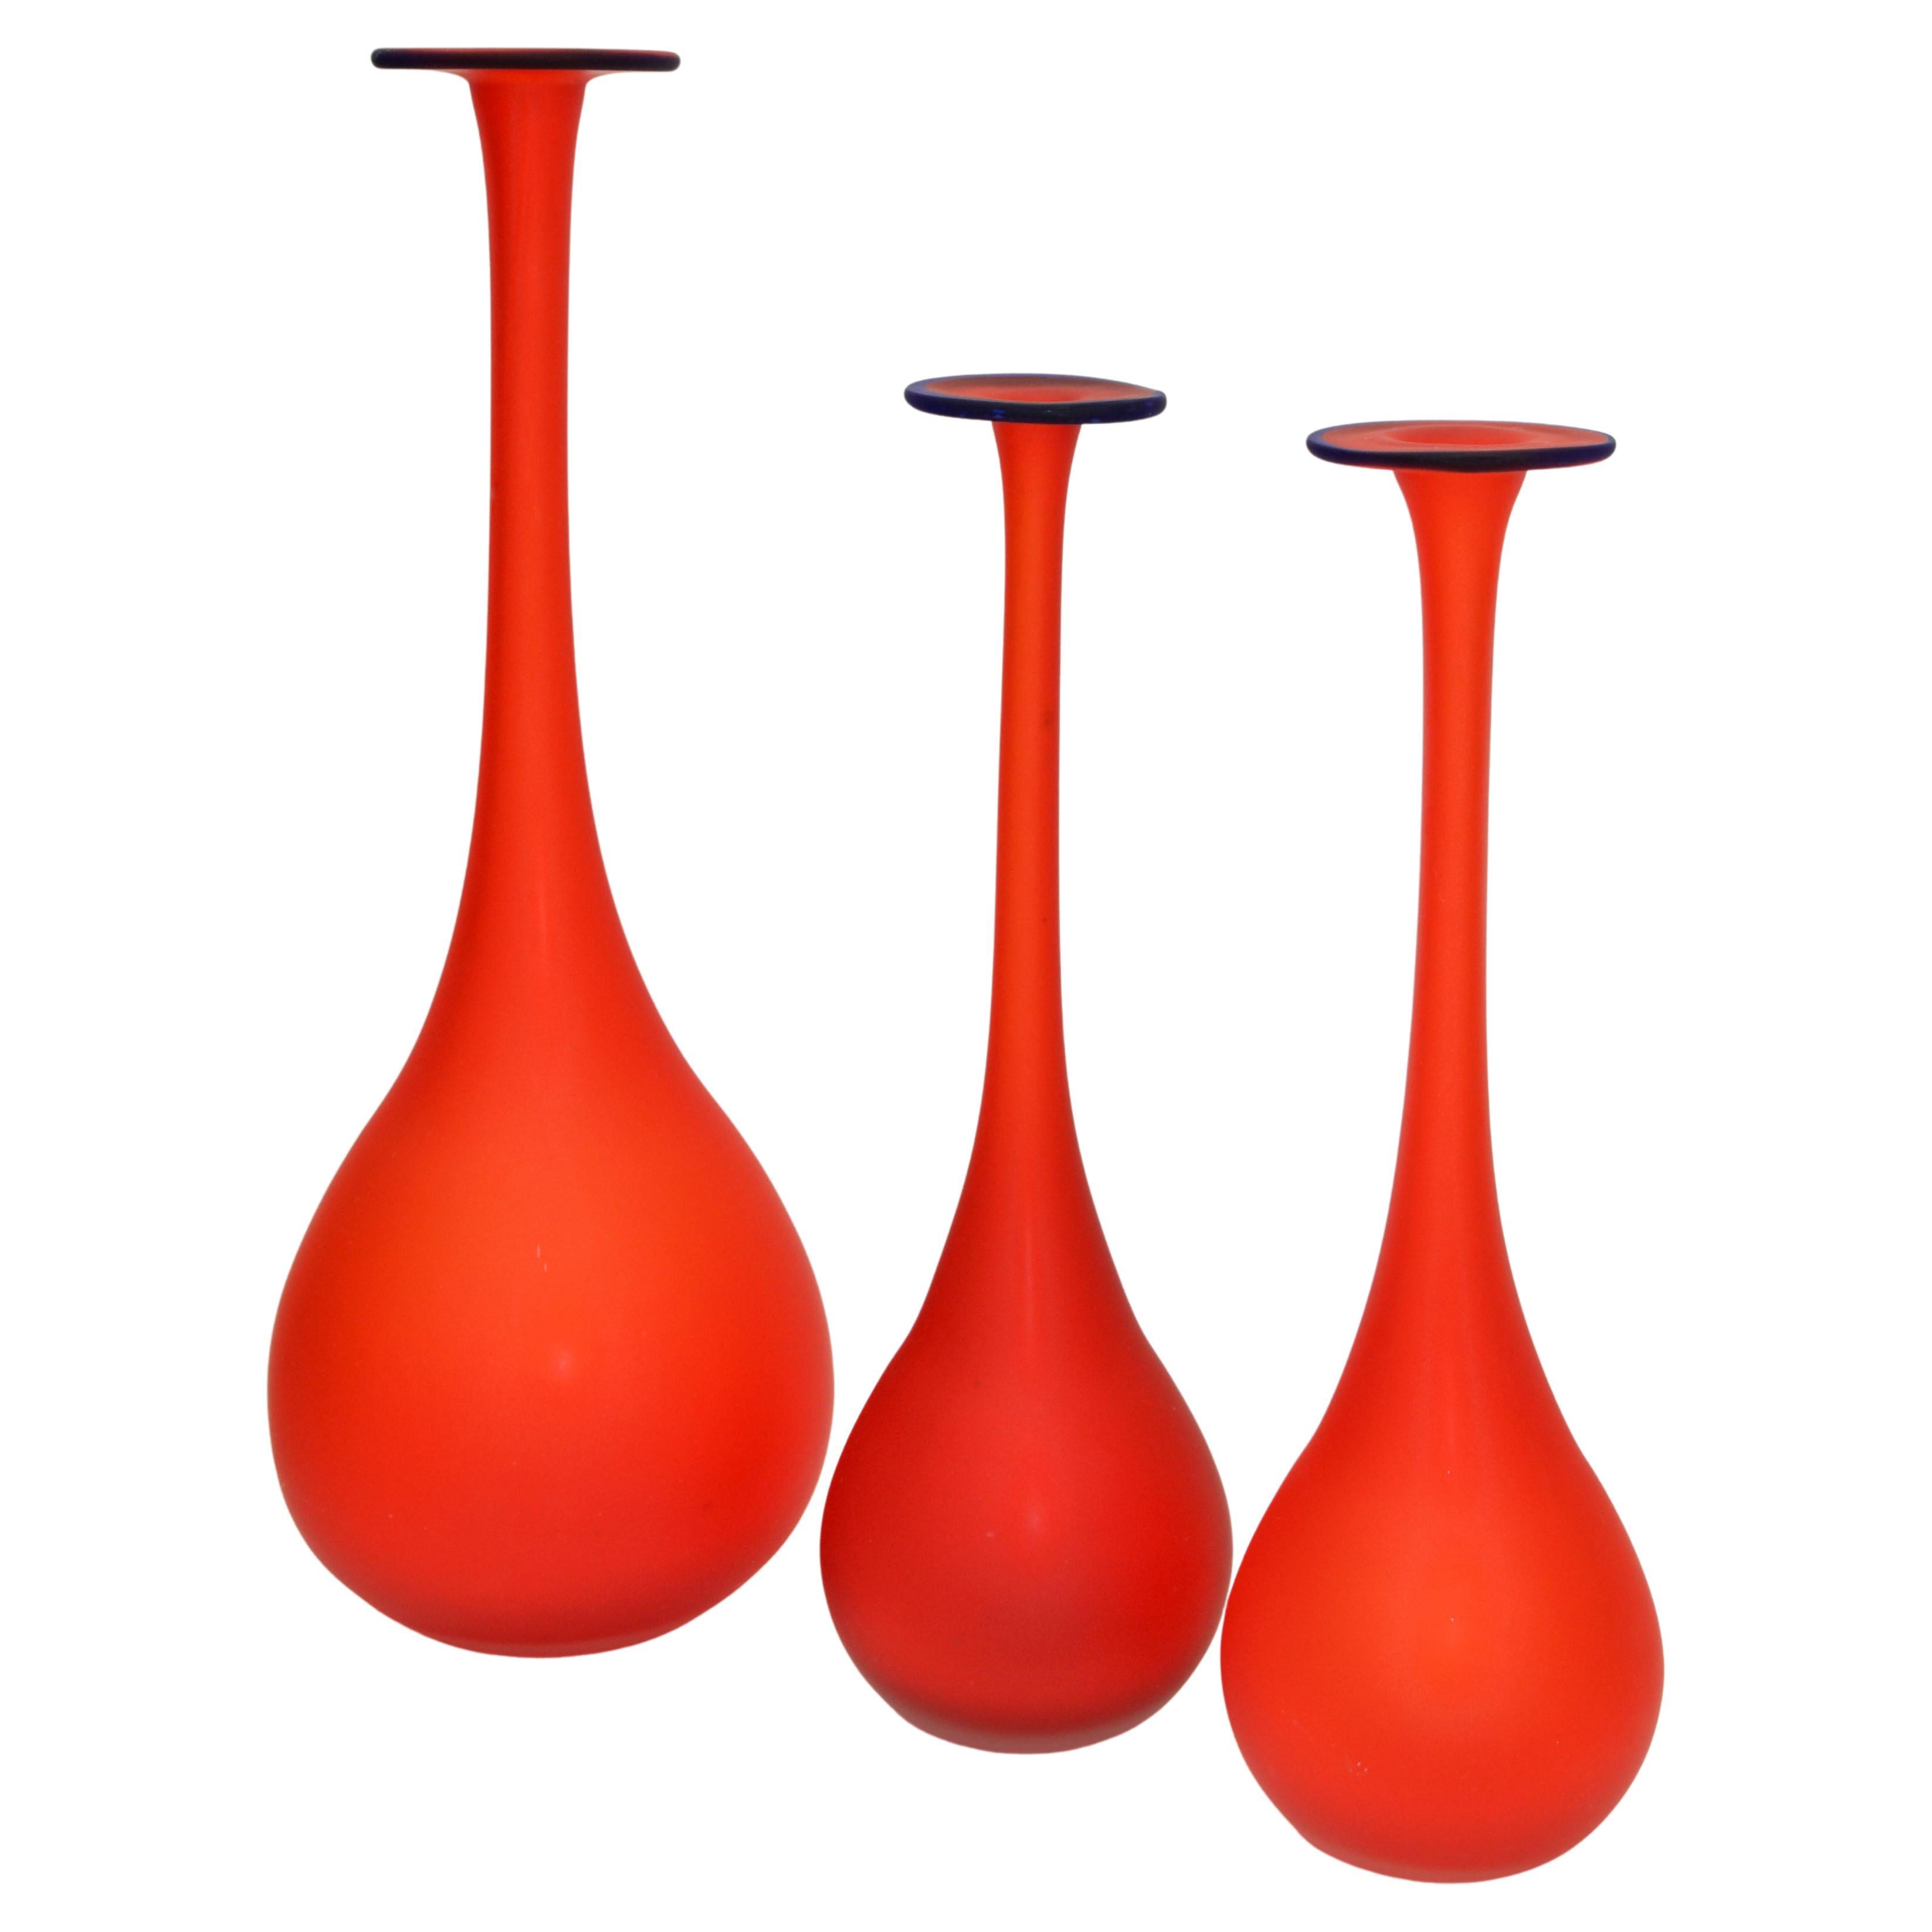 3 Nesting Vases Moretti Style Translucent Red & Blue Satin Glass Bud Vases Italy For Sale